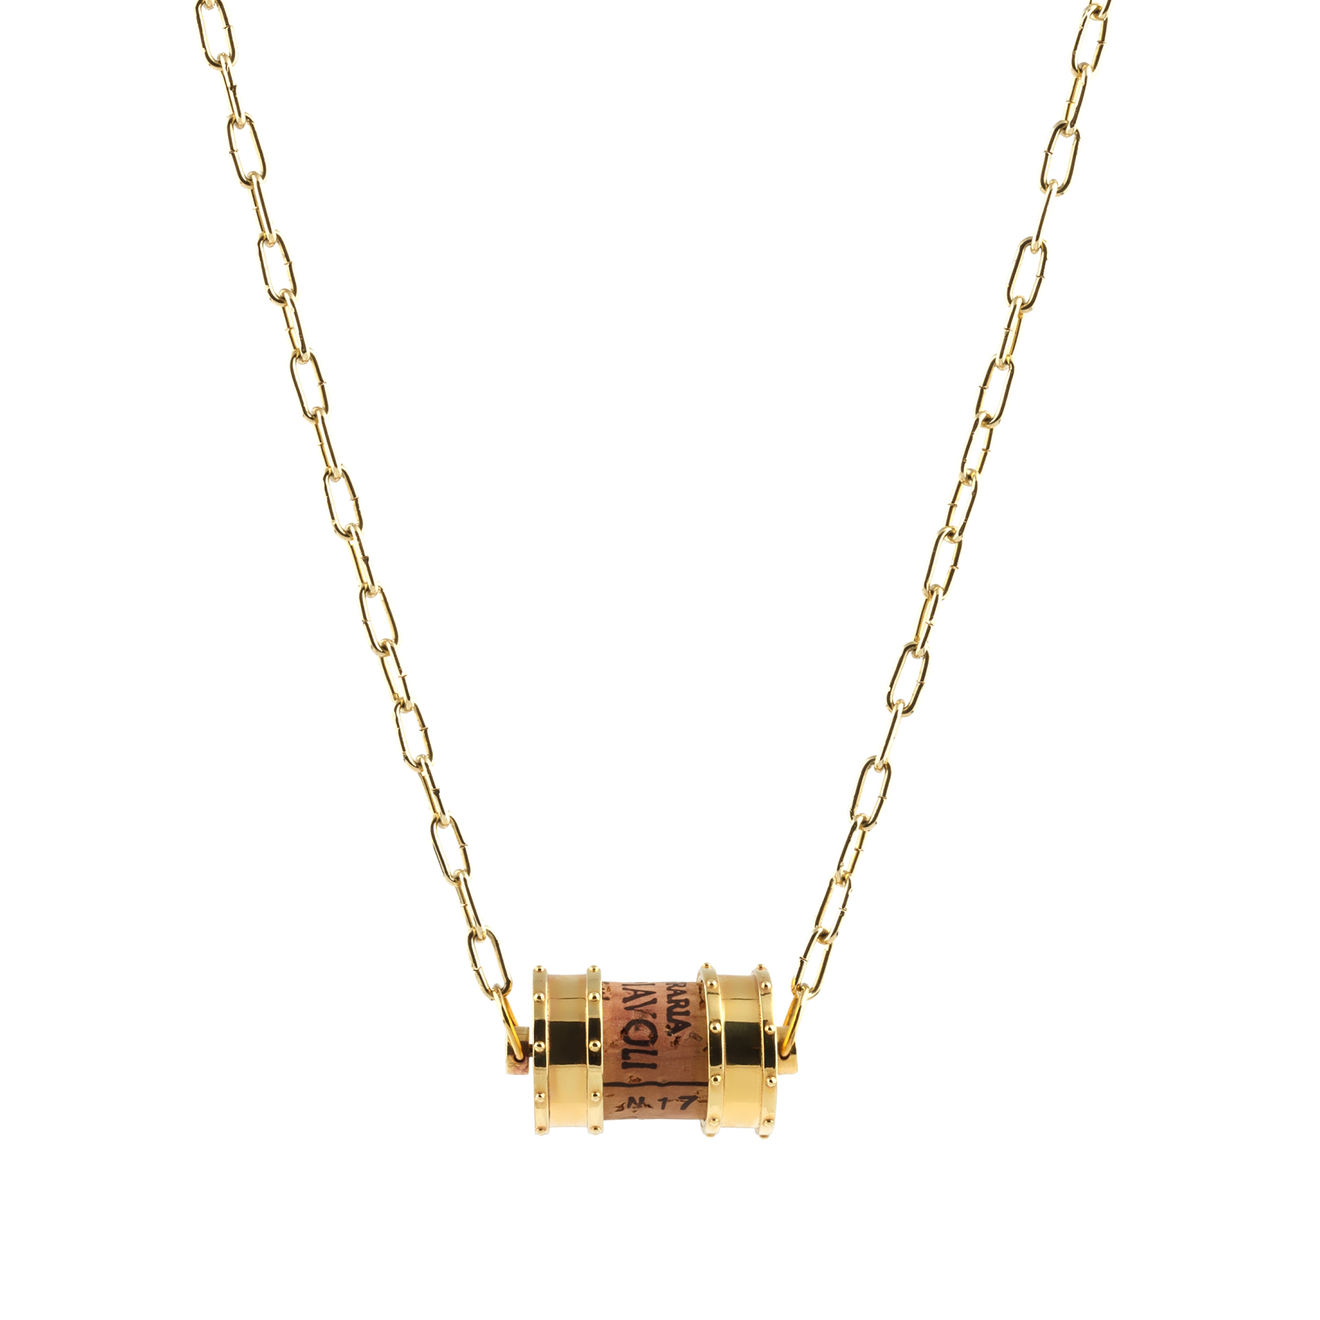 AMARIN Jewelry Позолоченная подвеска CORK Бочка amarin jewelry позолоченное кольцо cork из бронзы бочка